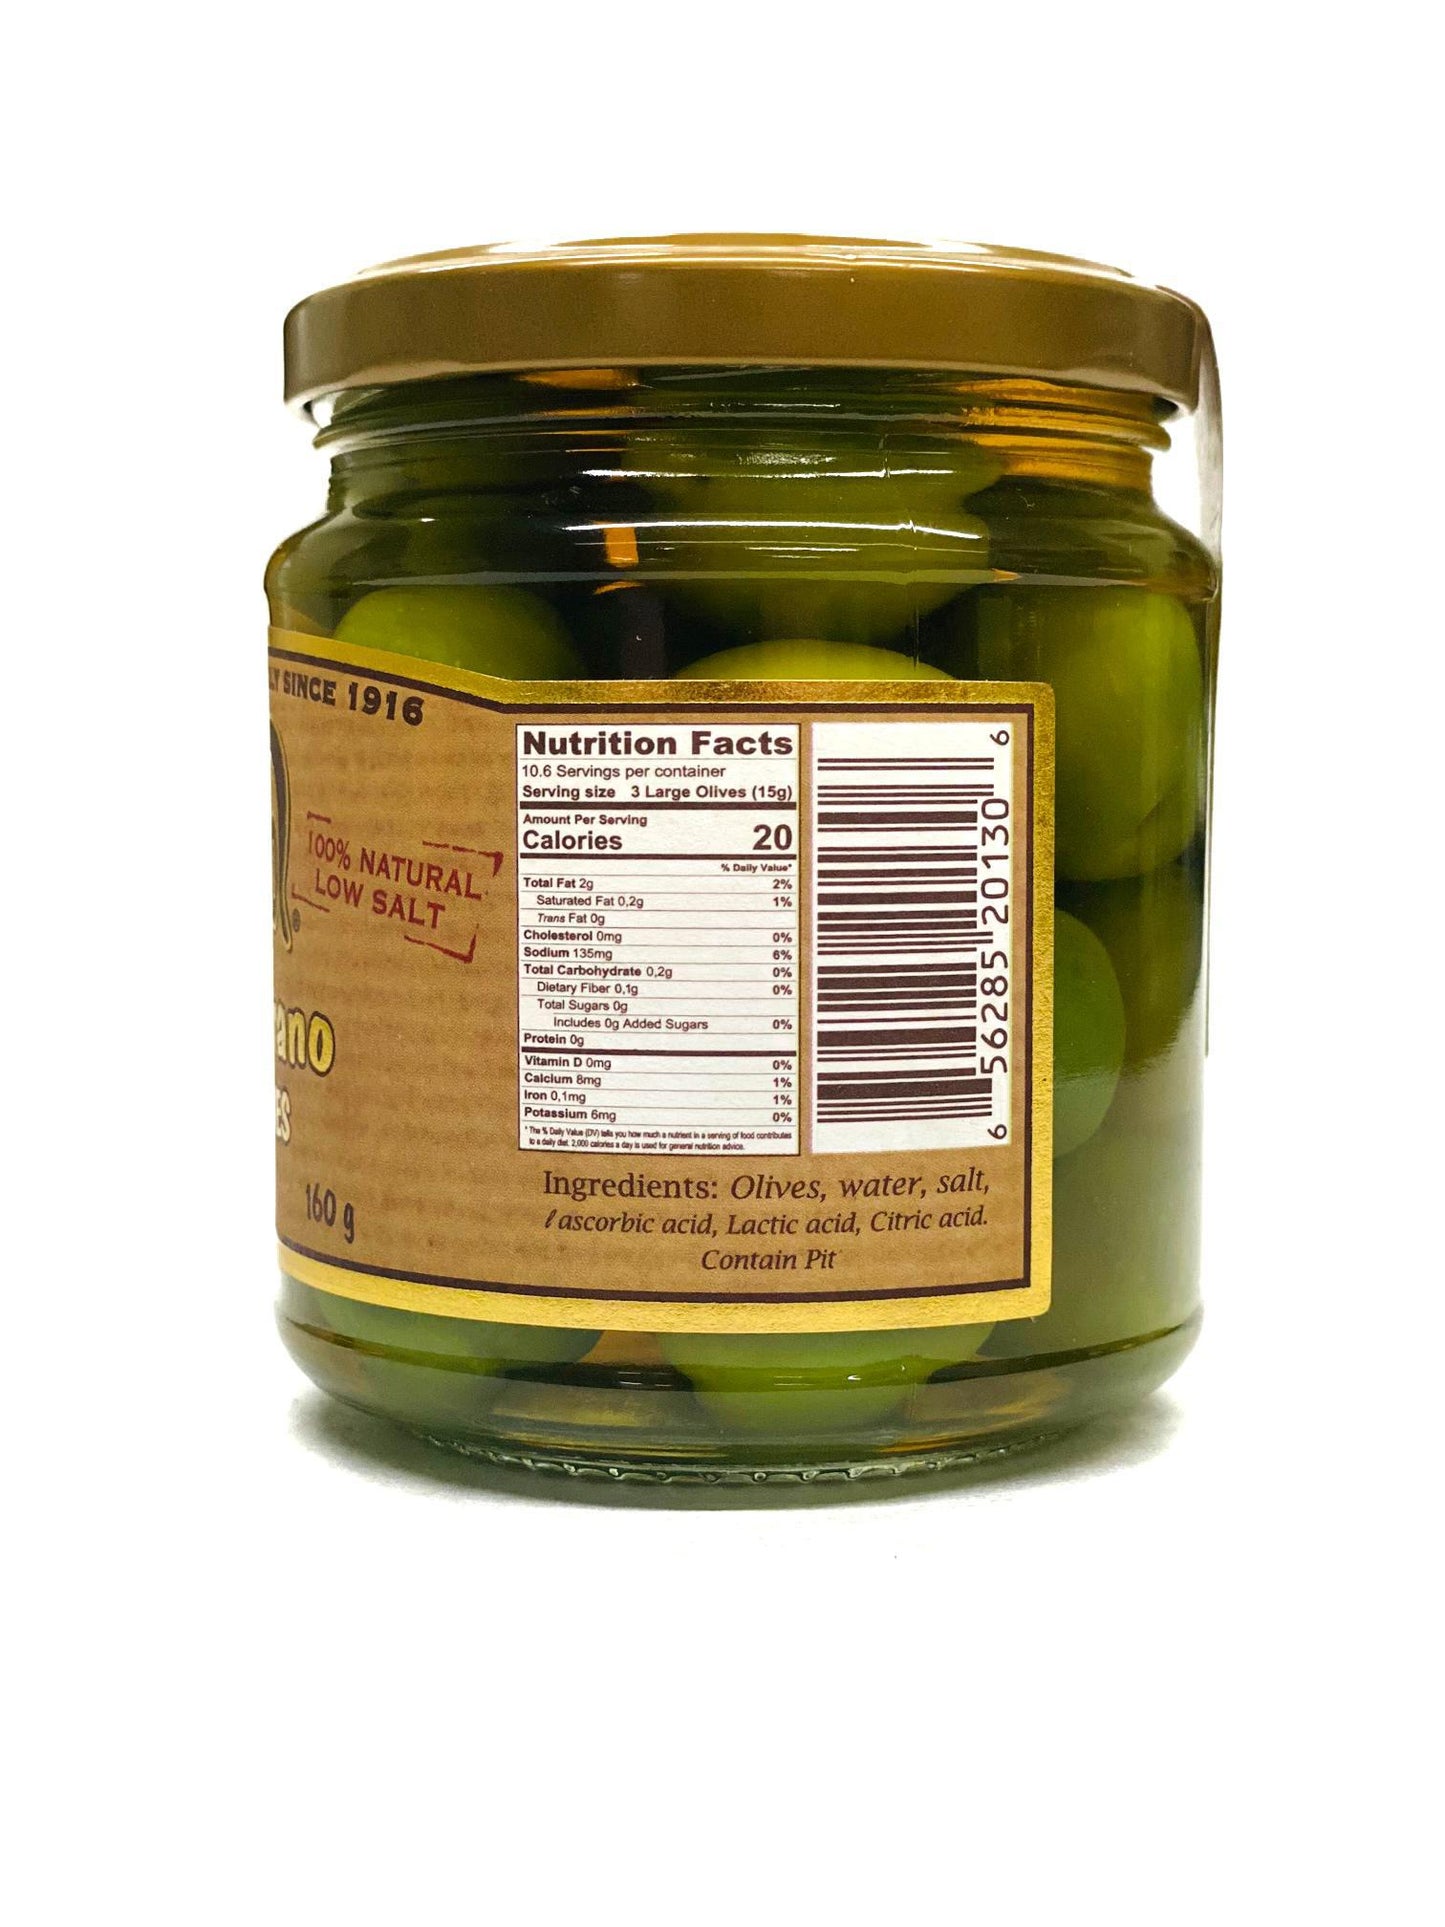 Paesano Castelvetrano Green Olives, 16 oz